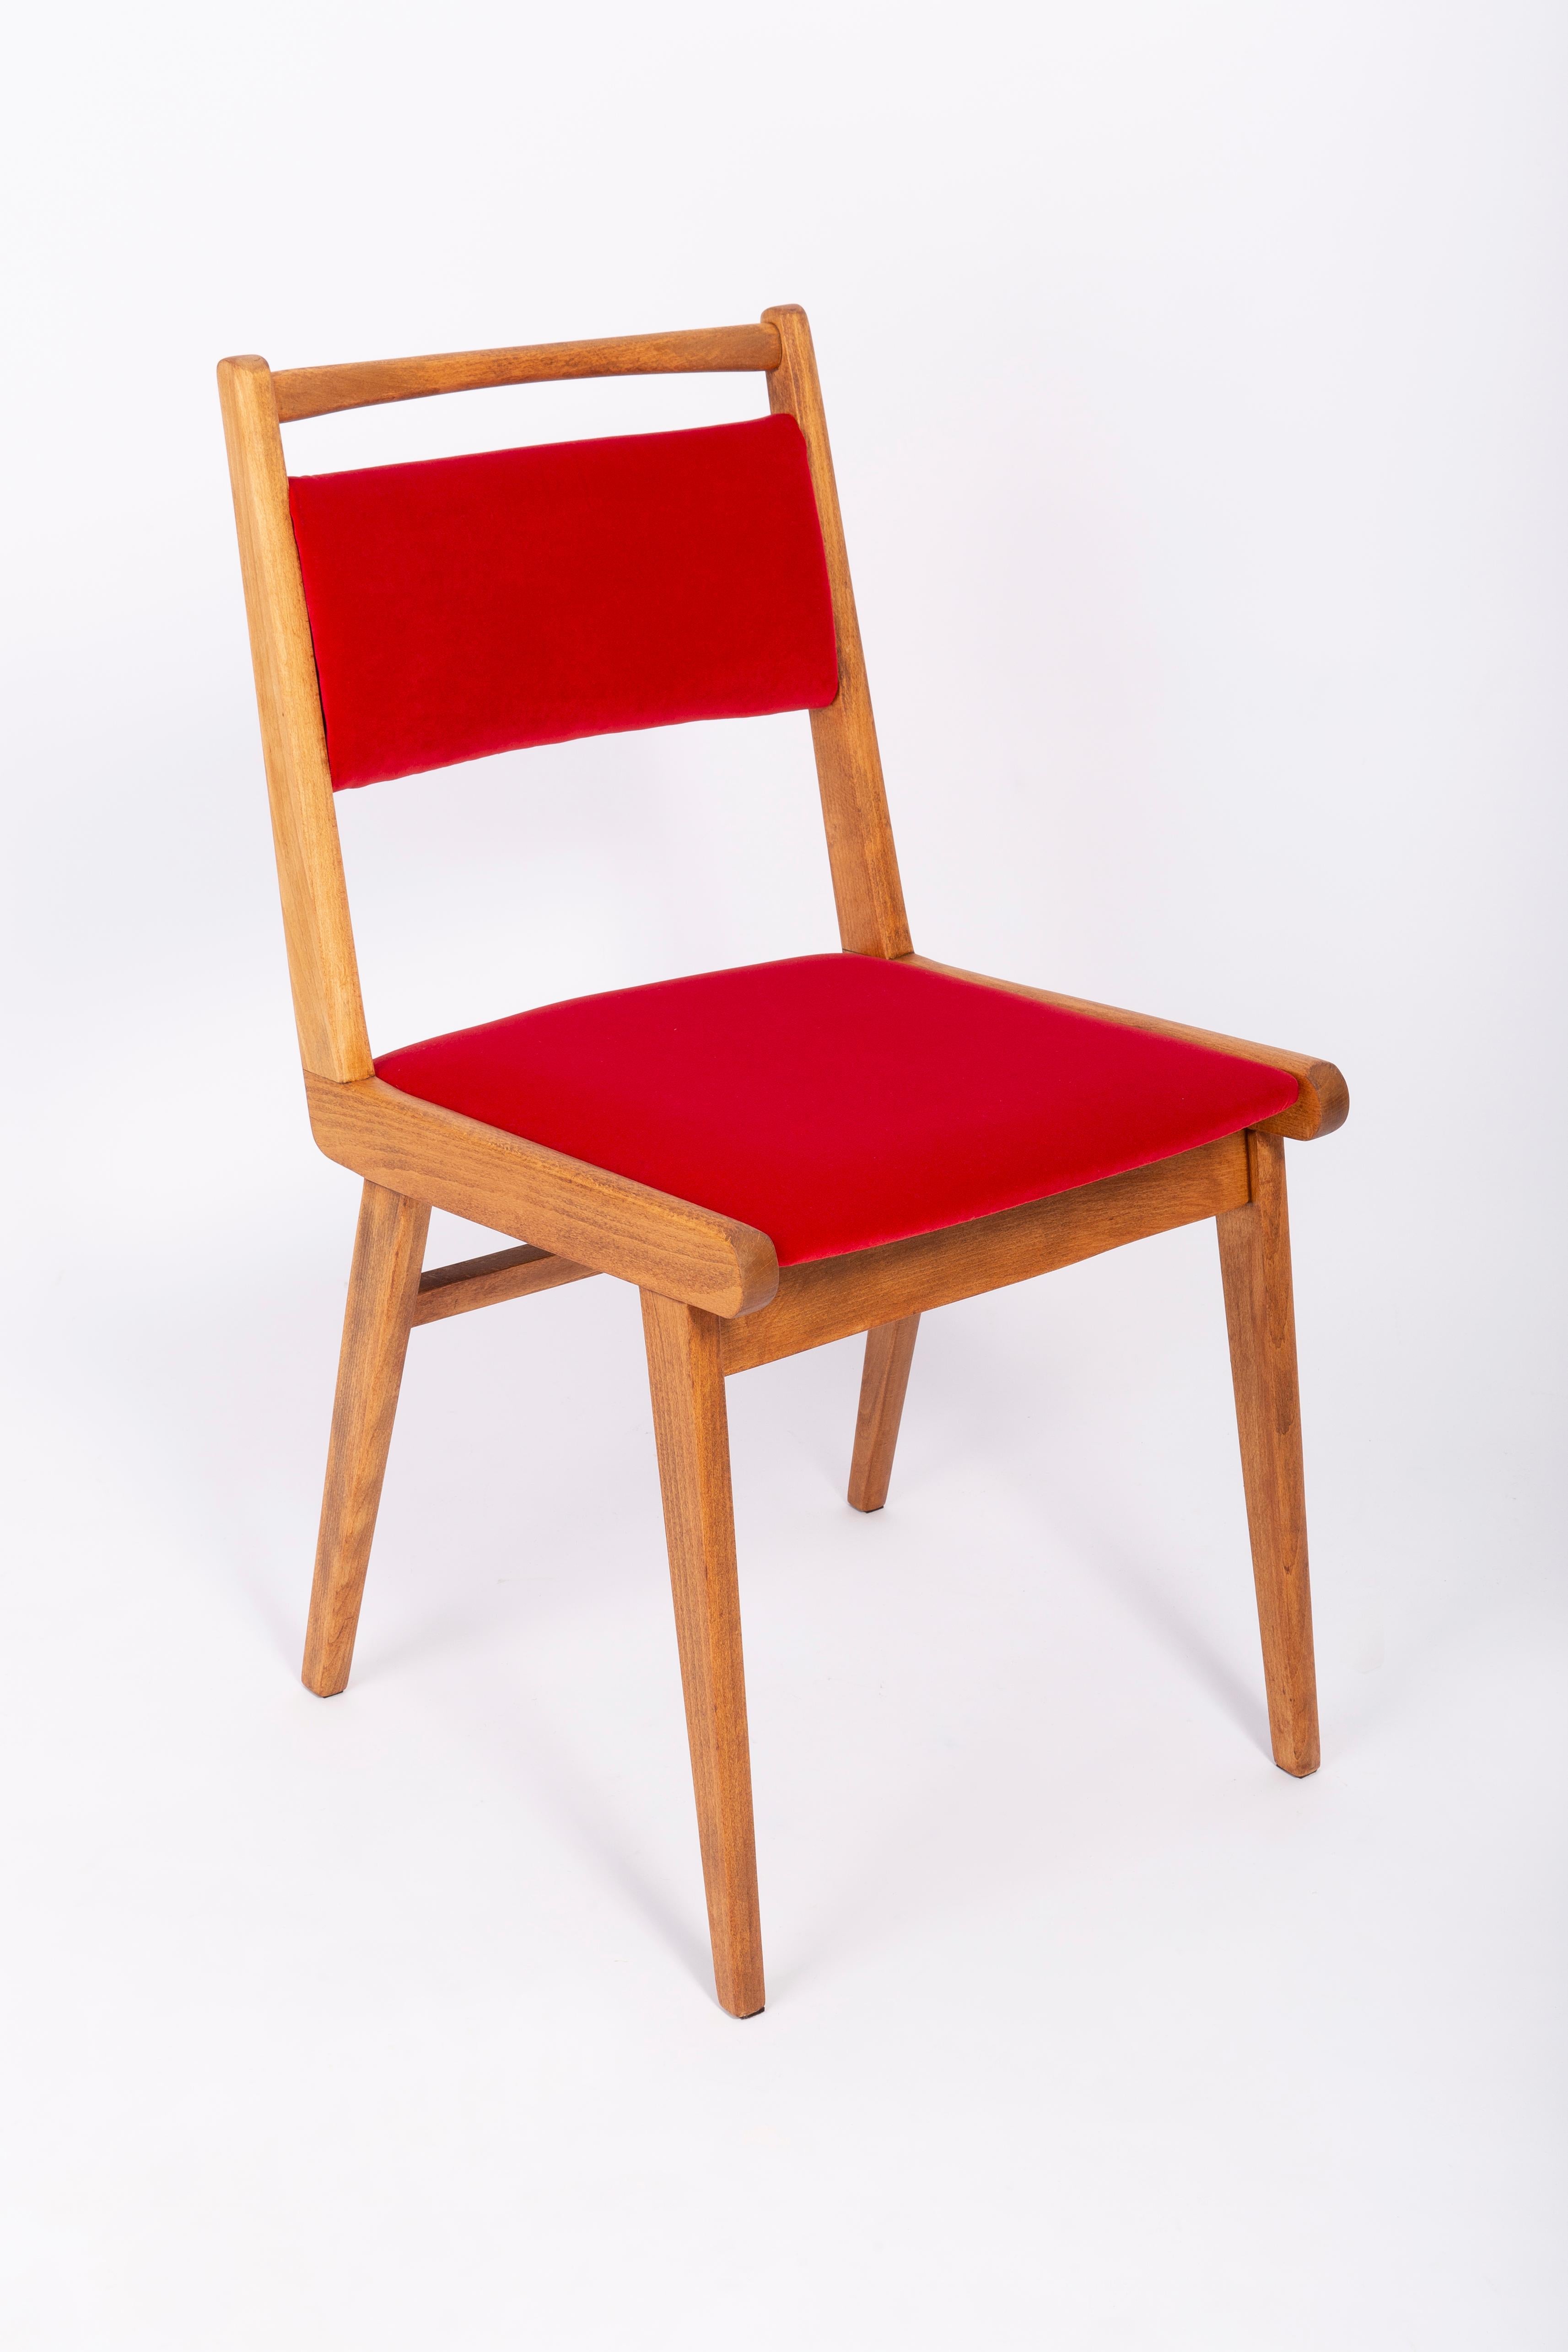 Polish Set of Four 20th Century Red Velvet Chairs, by Rajmund Halas, Poland, 1960s For Sale